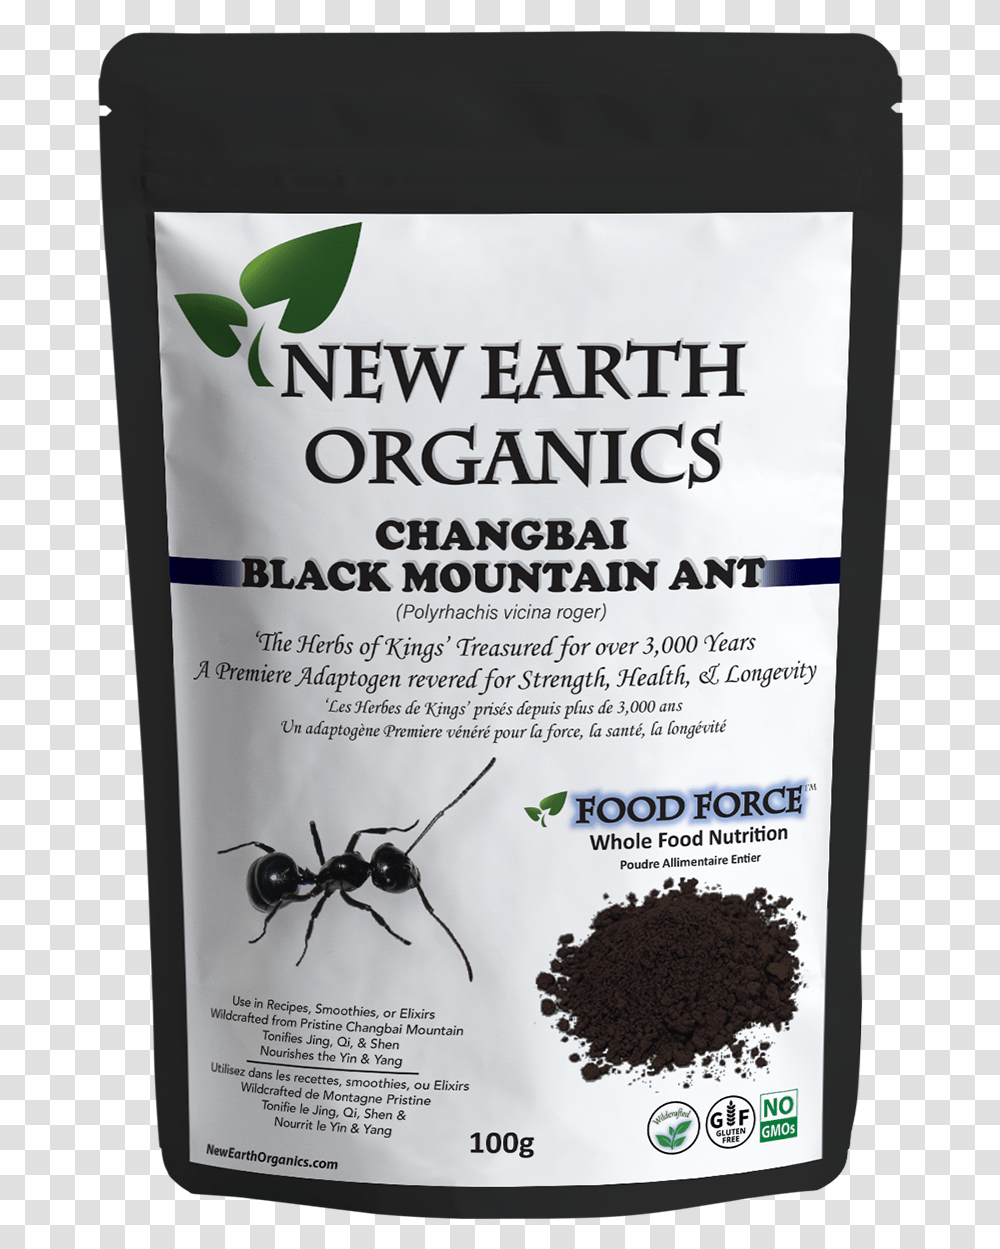 Wild Black Changbai Mountain Ant Powder Happy New Year 2012 Wishes, Spider, Invertebrate, Animal, Arachnid Transparent Png